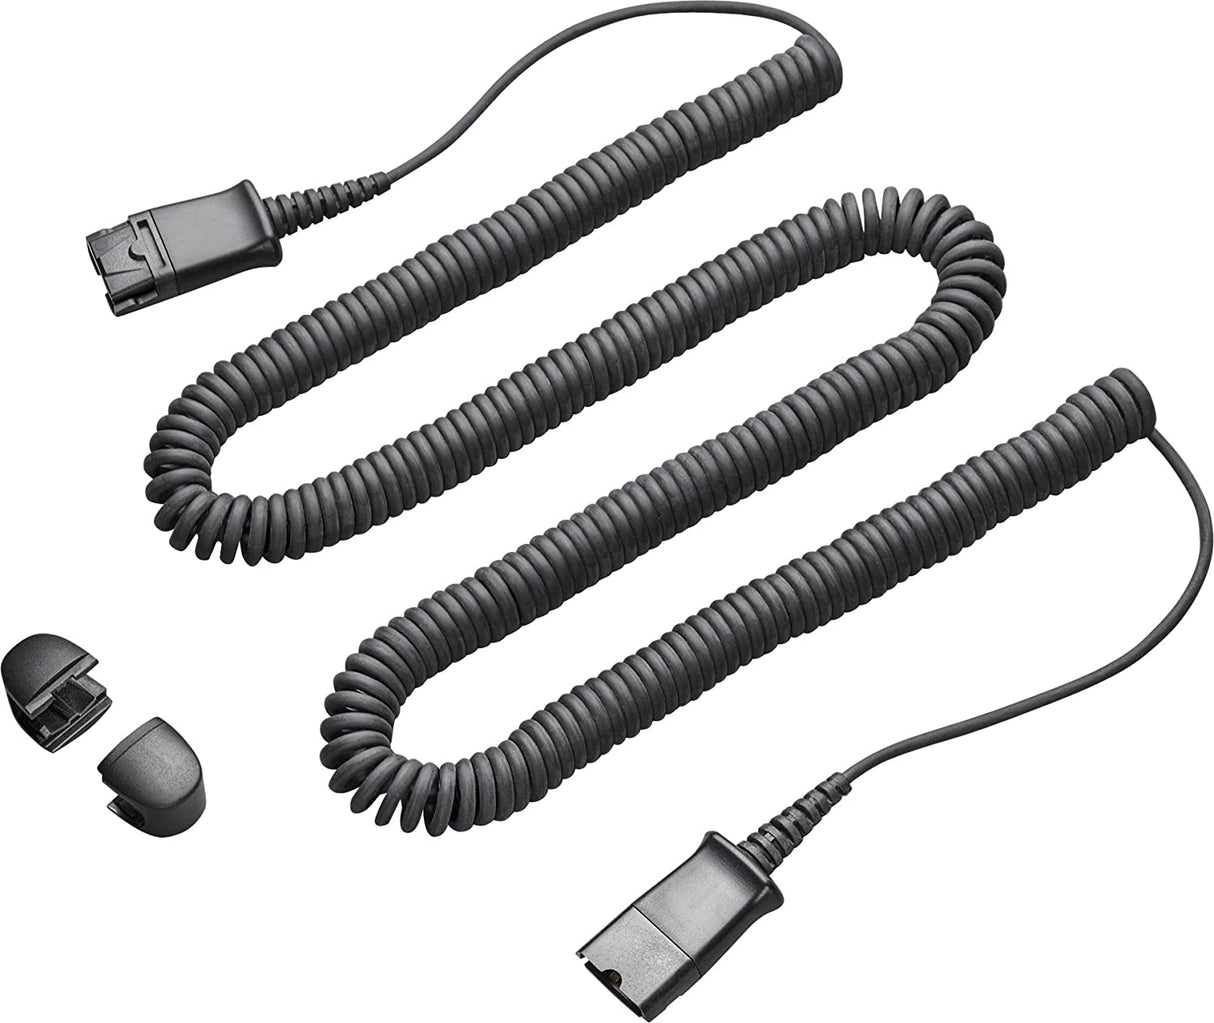 Plantronics 10' QD to QD Ext Cable, Black (40711-01)